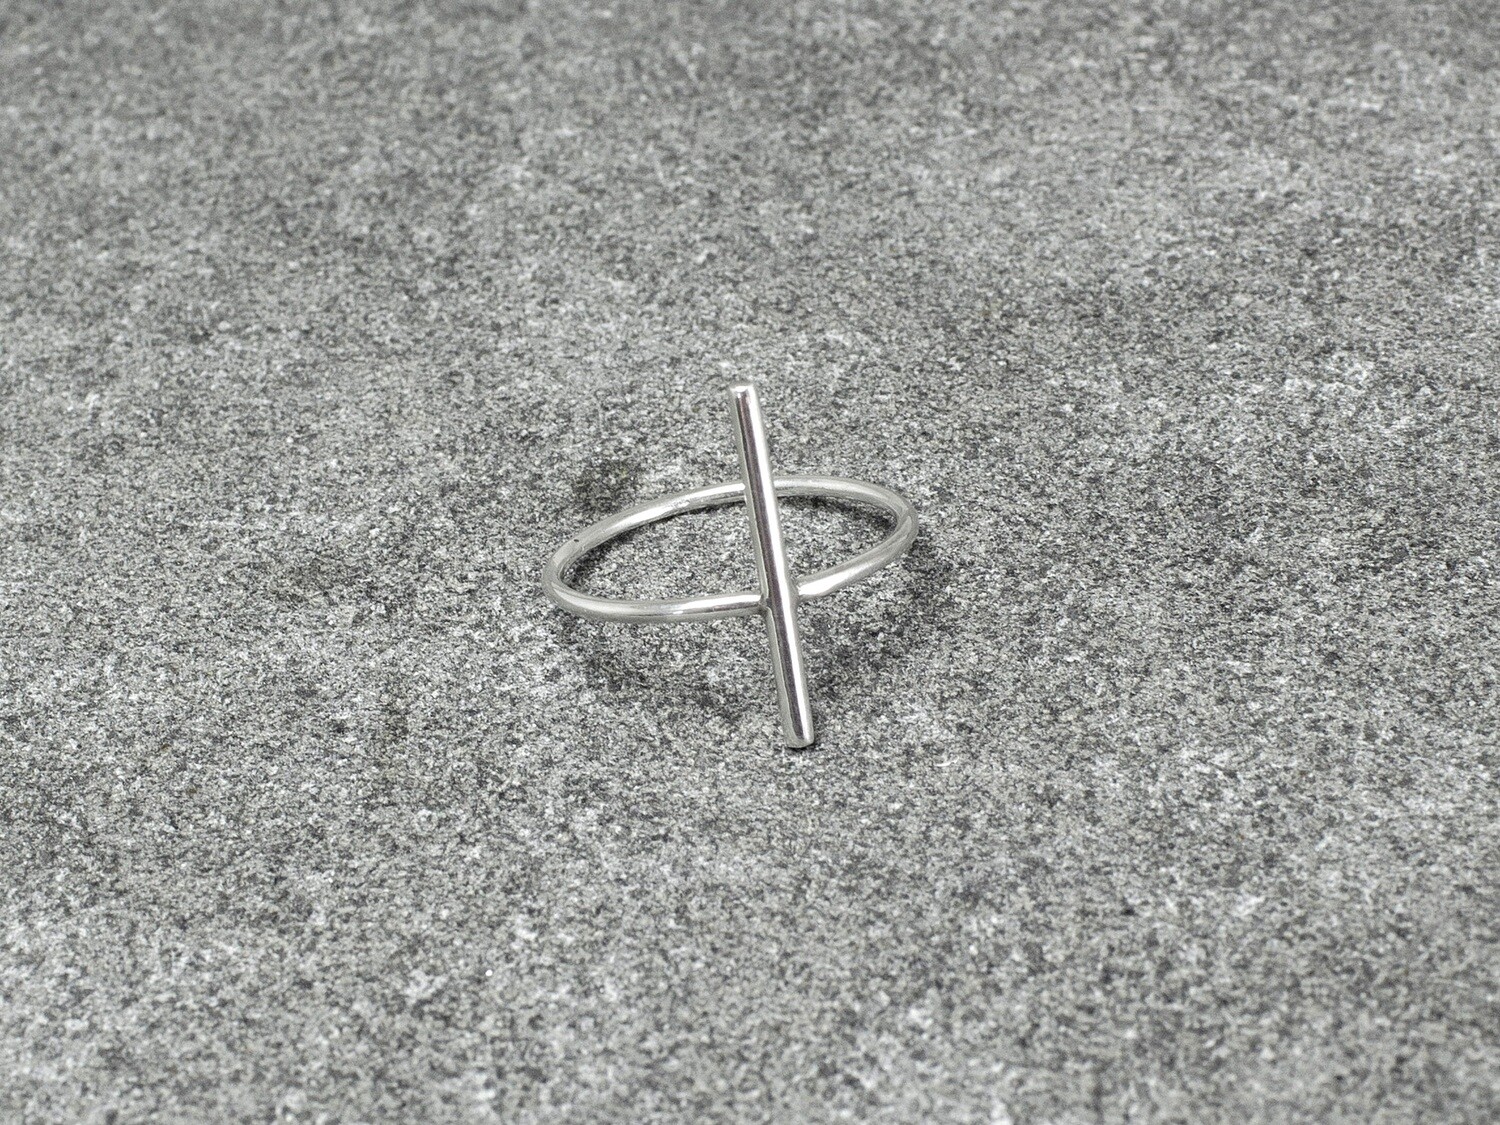 Handmade minimalist silver ring.